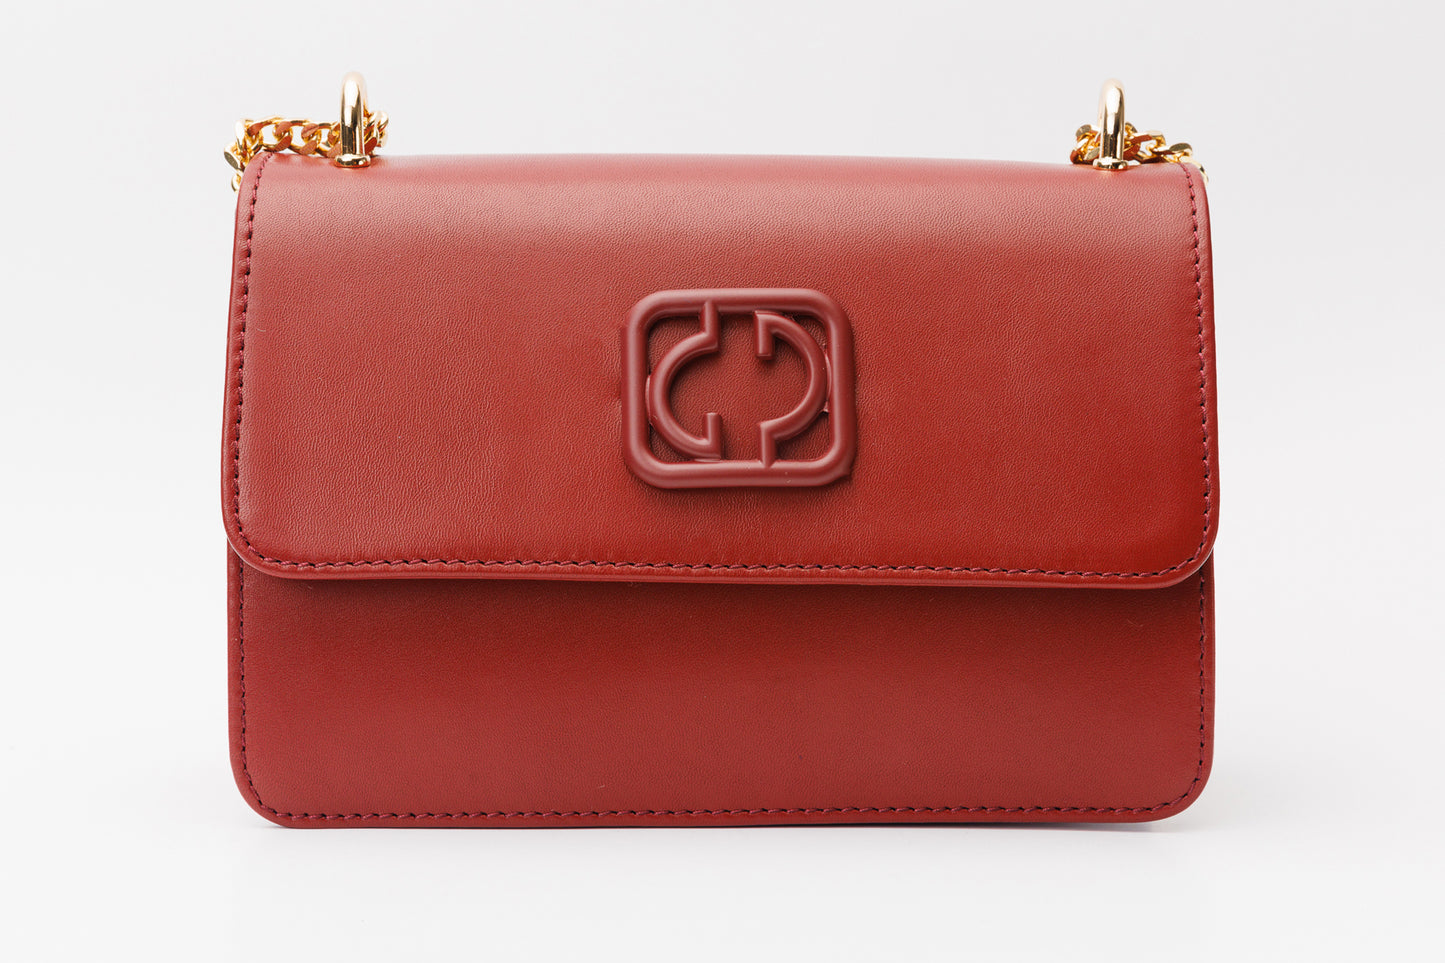 The Maneadero Dark Red Leather Handbag